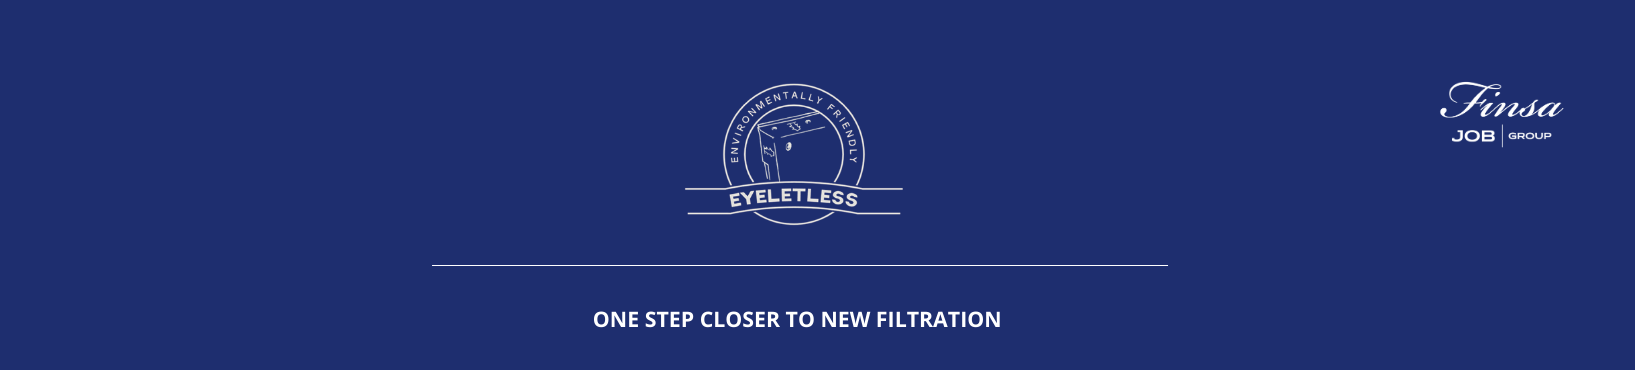 New patented EYELETLESS system logo.